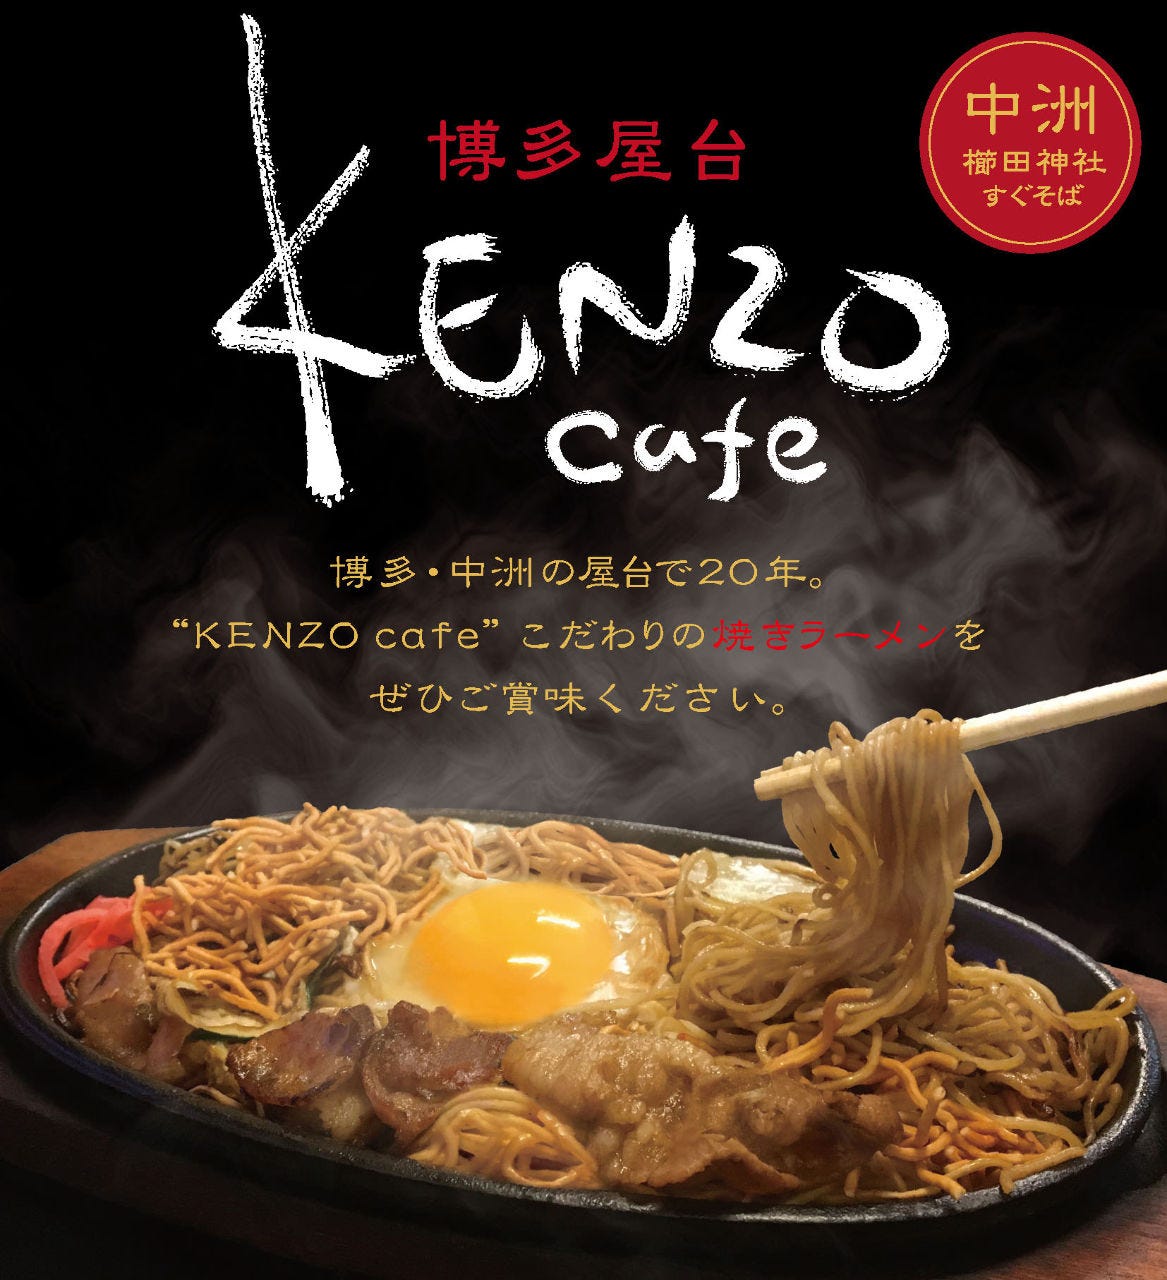 Hakatayatai KENZO Cafe image